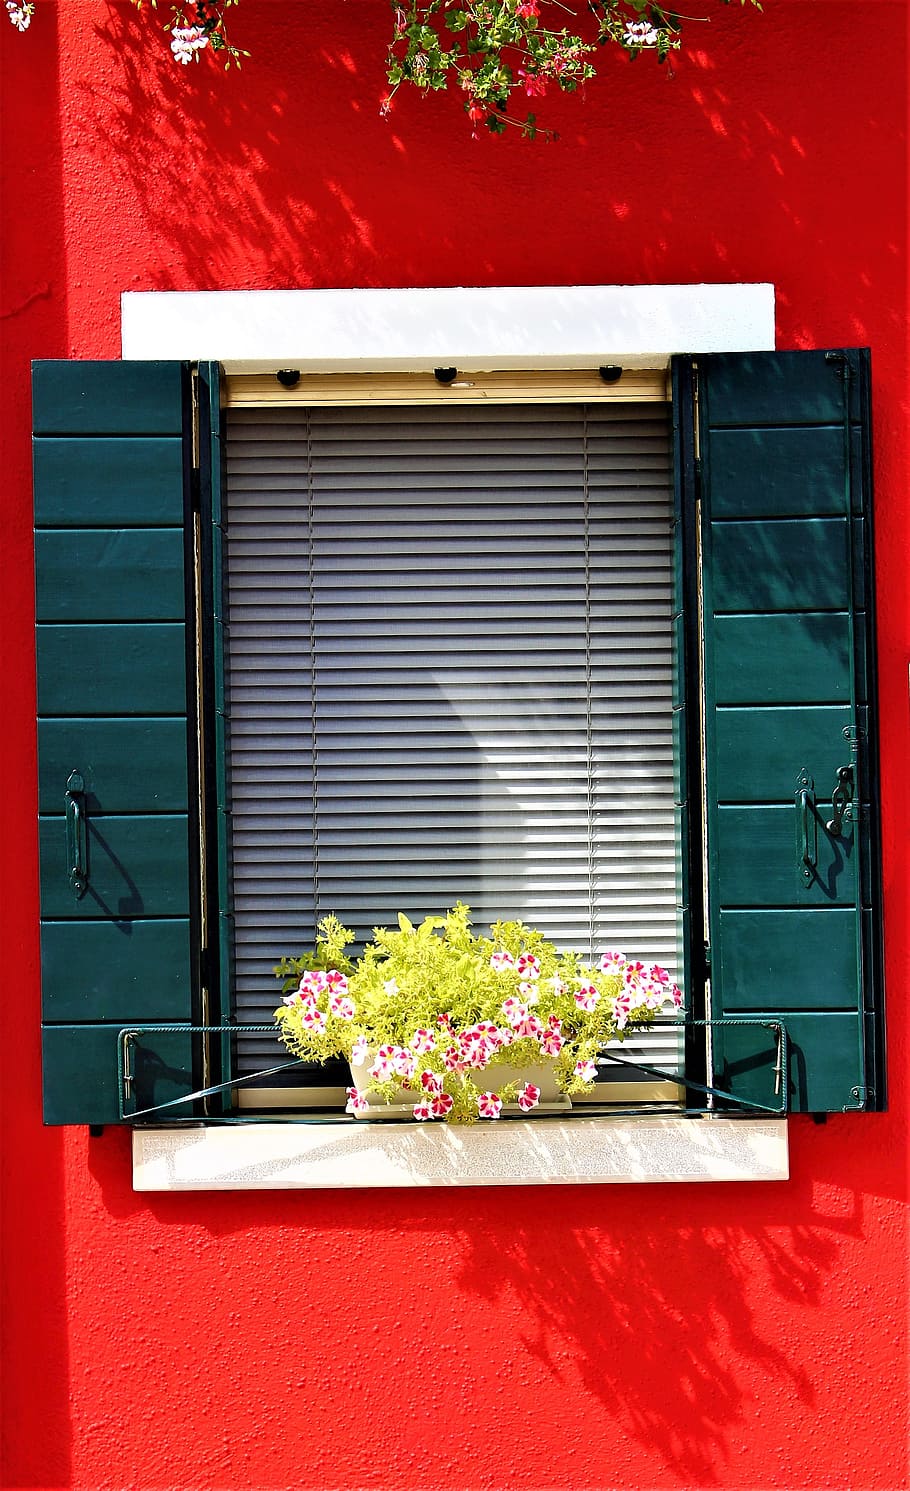 ventana, Venecia, Burano, Italia, colorido, pintorescamente, persianas, casa antigua, arquitectura, casa de piedra